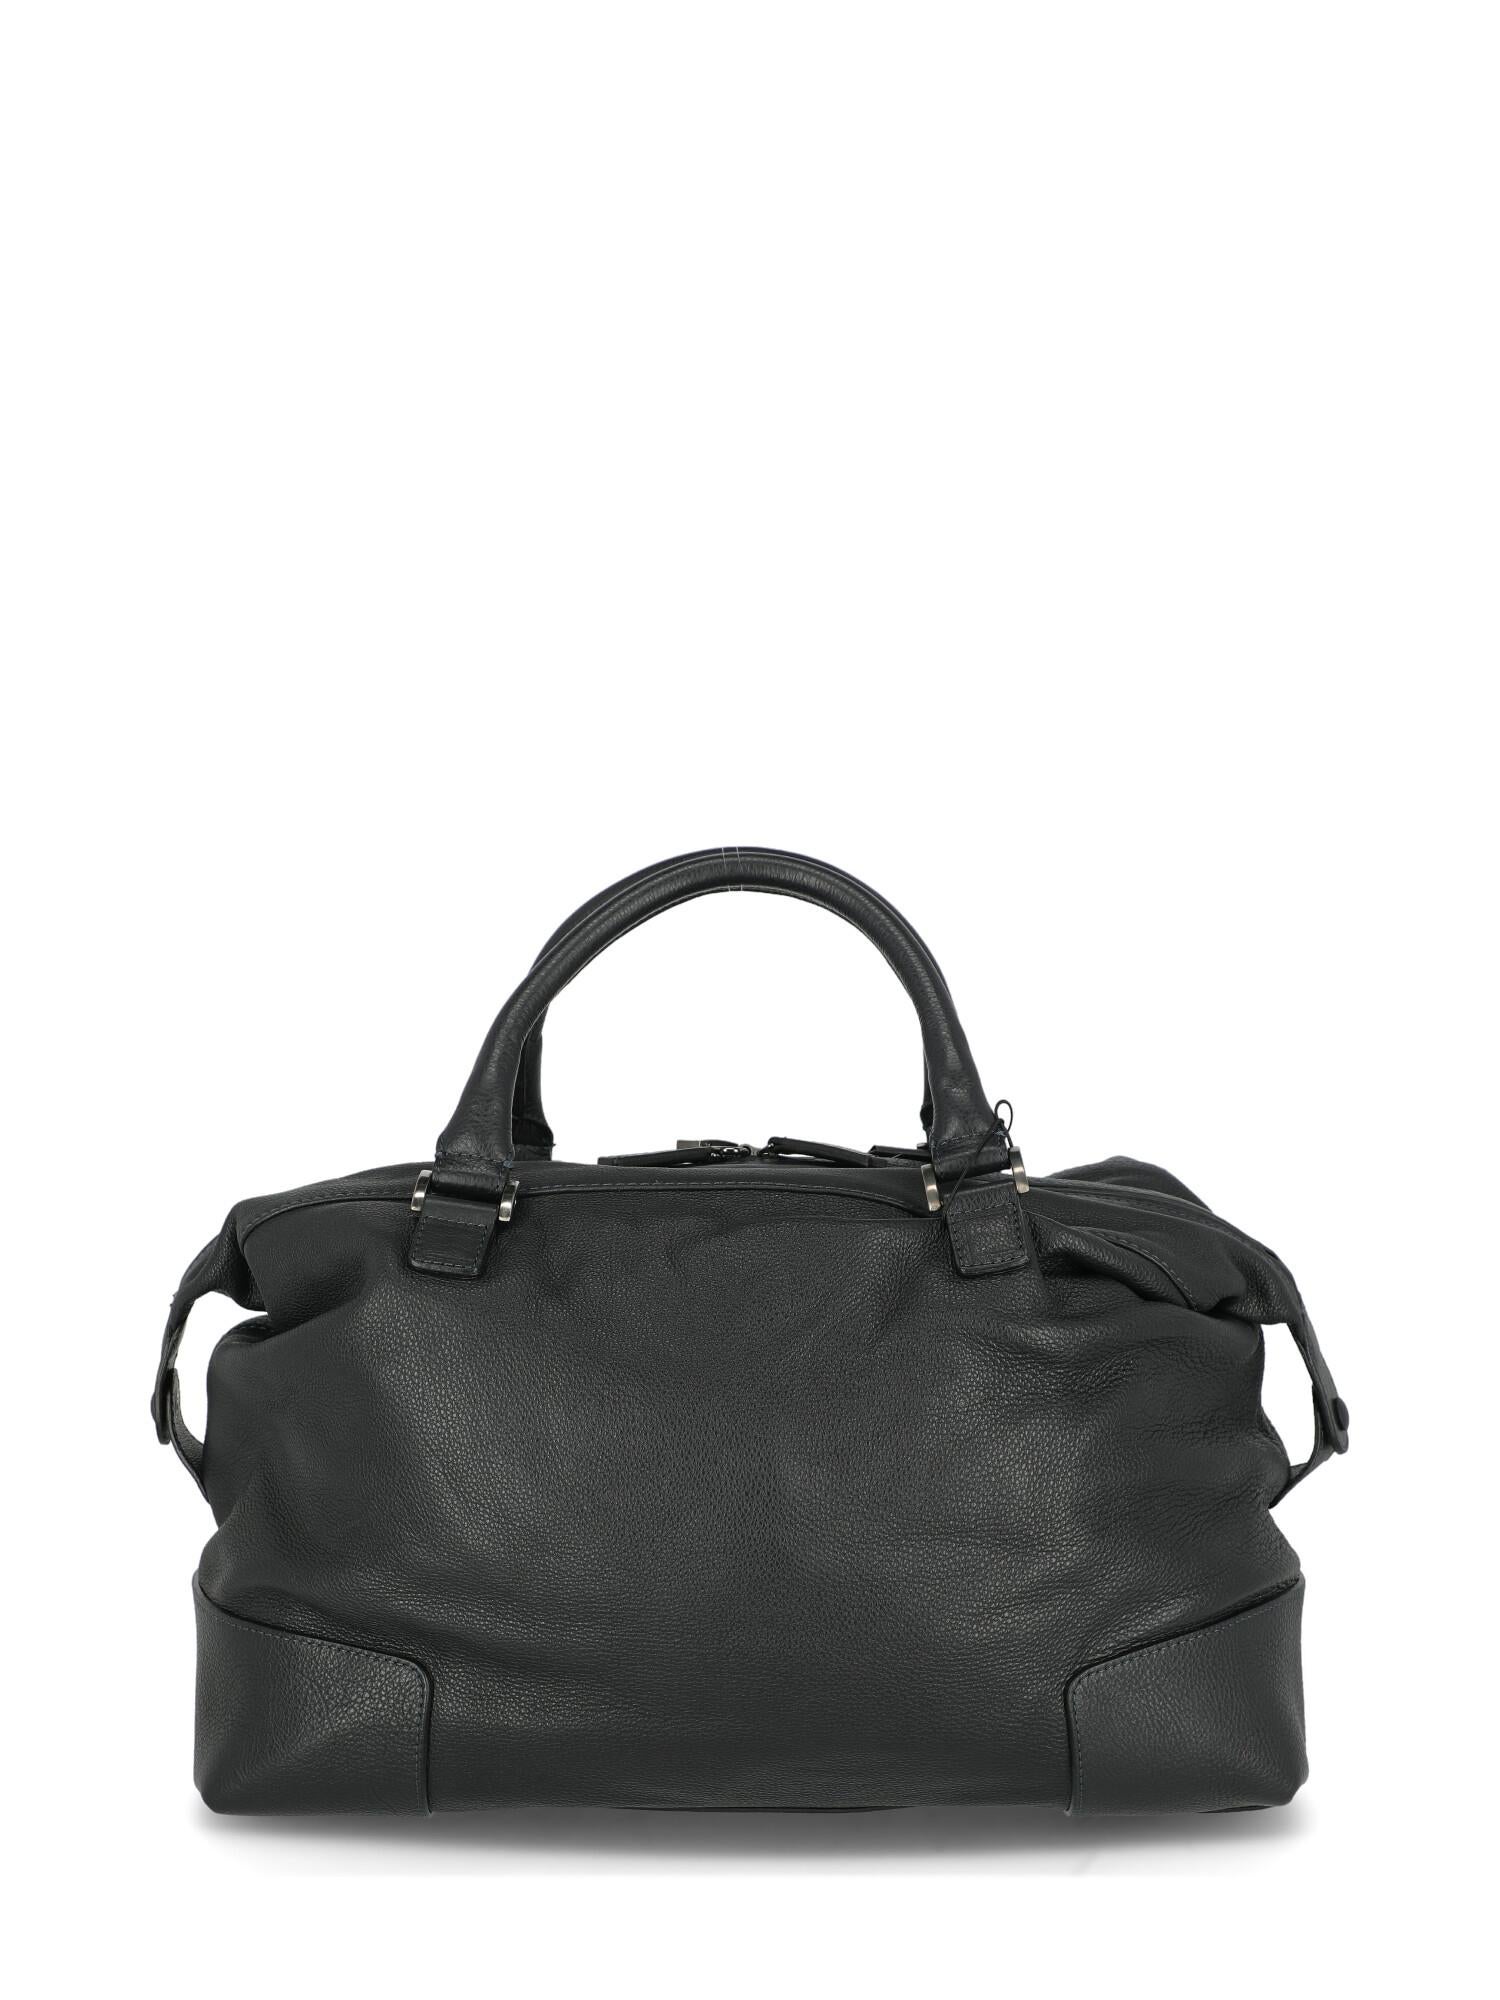 Black Giorgio Armani Woman Travel bag Navy Leather For Sale